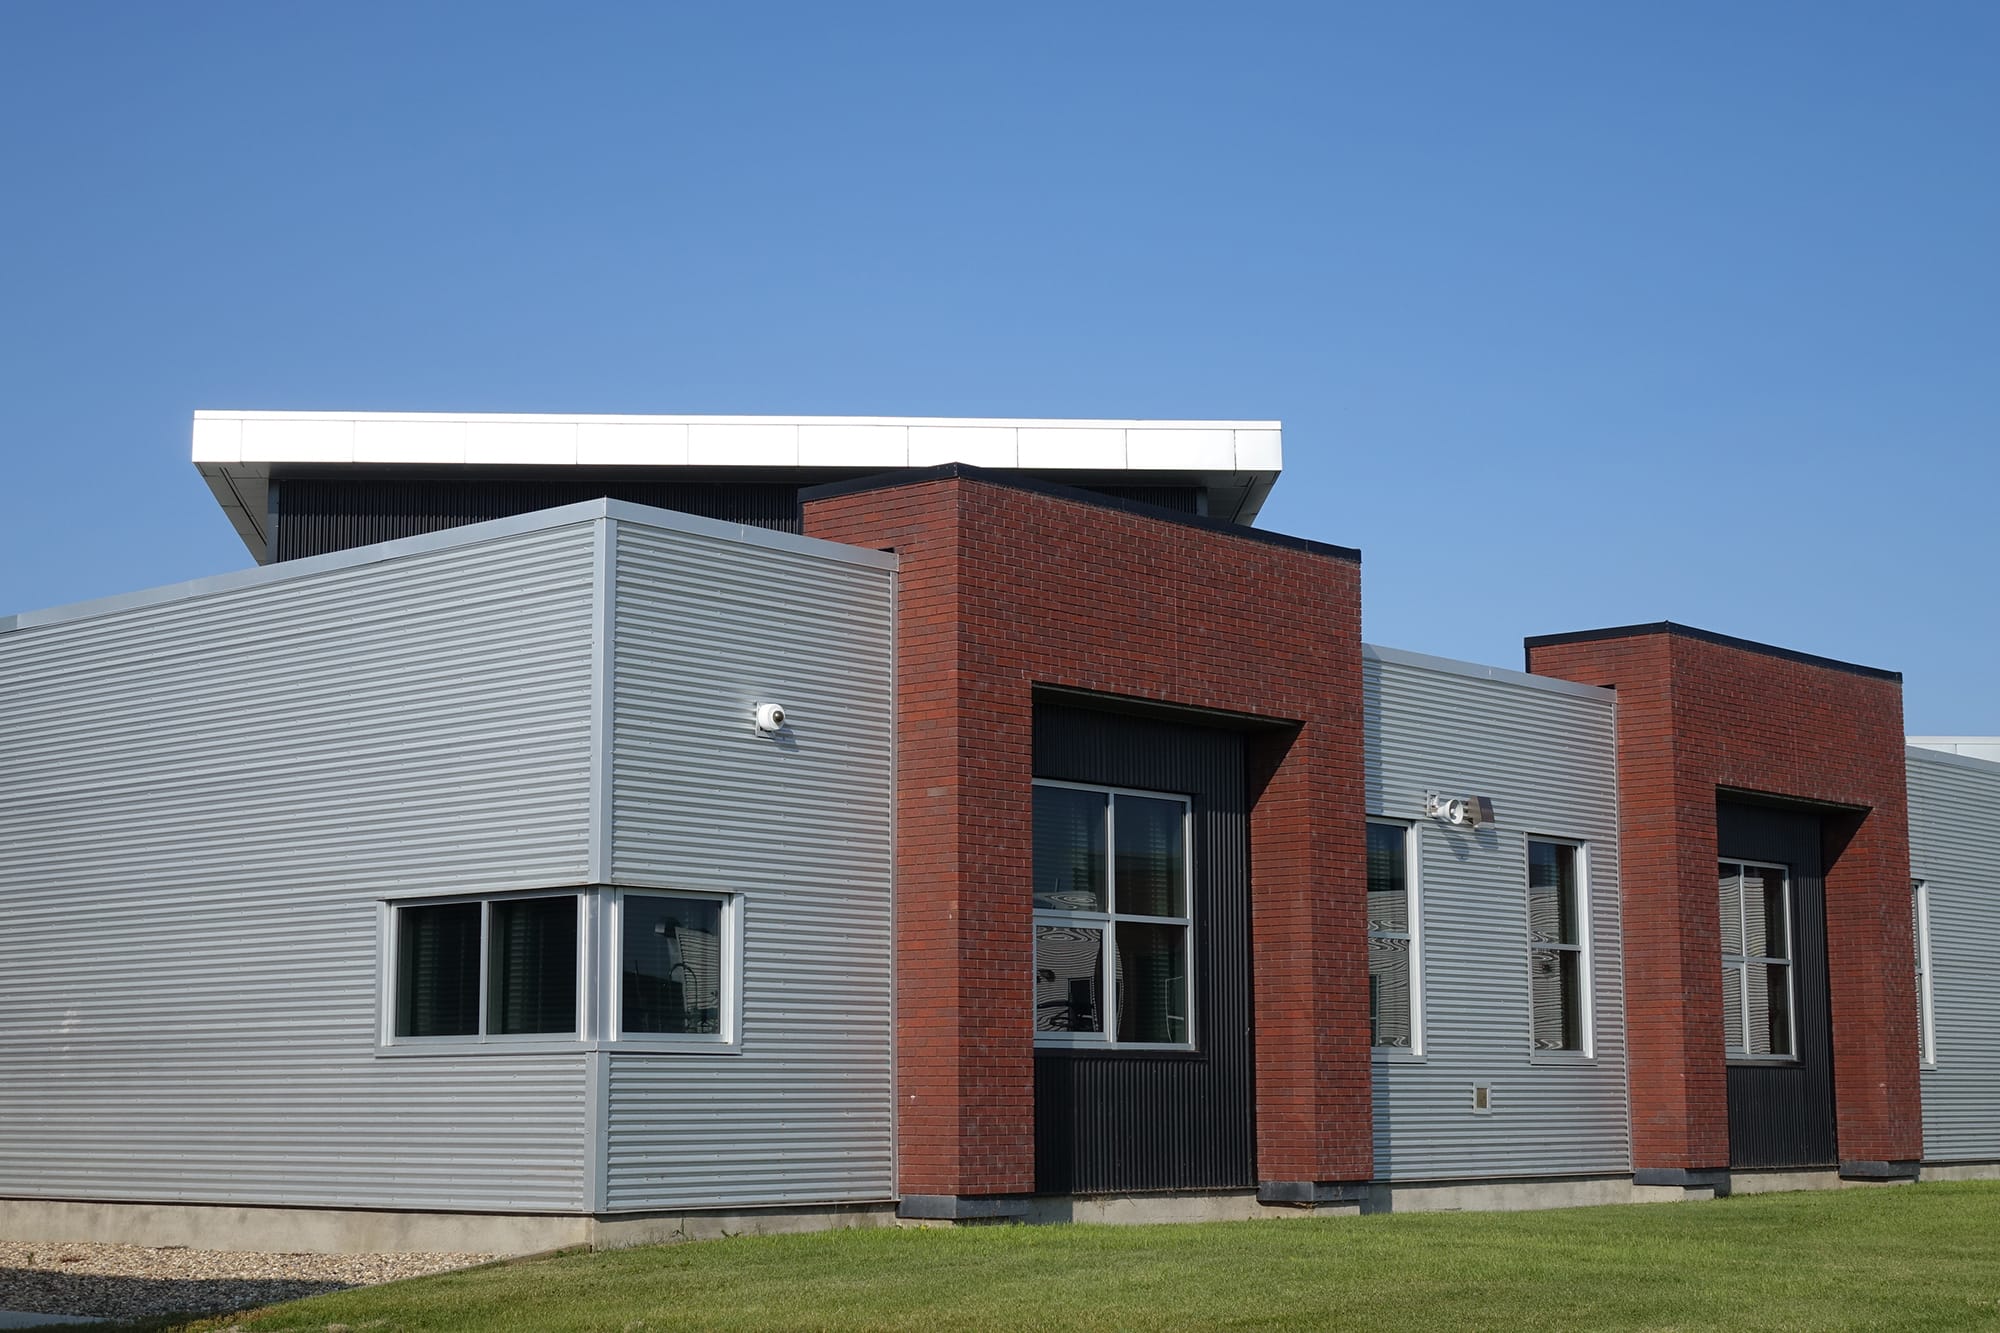 Clairmont Community School and Wellington Resource Centre exterior